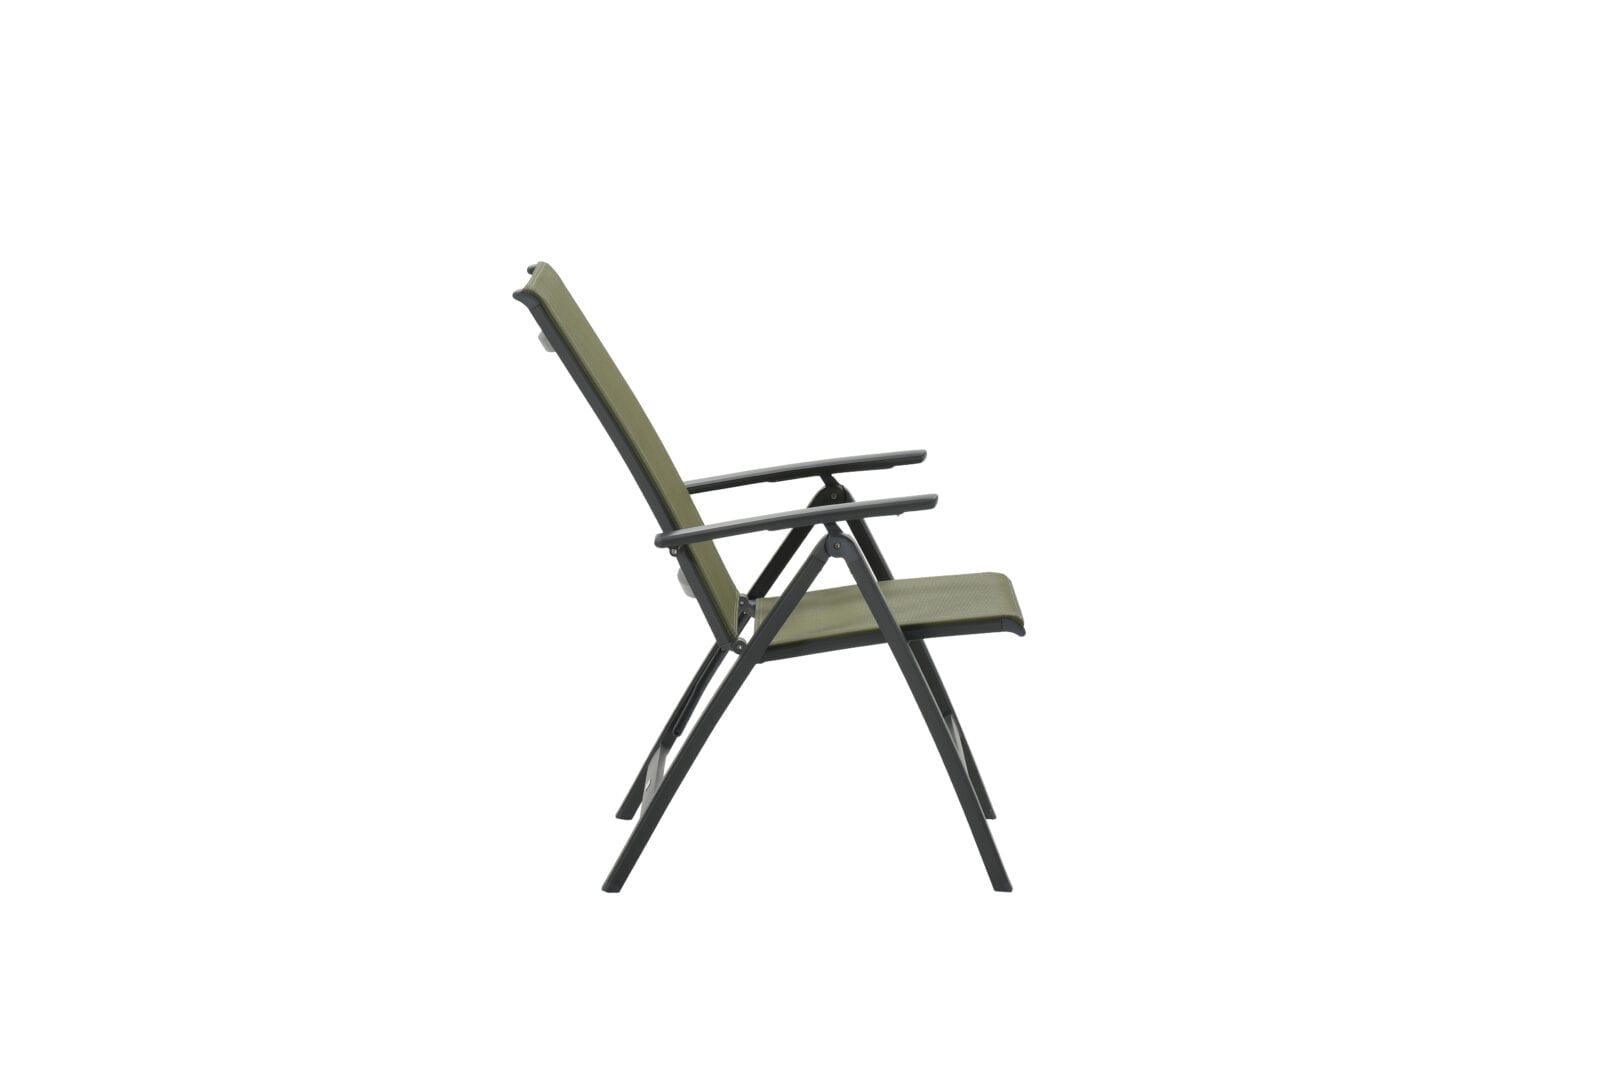 Gala verstelbare stoel - carbon black/ anthr/grey teak look 60308GT rechts 2 5MB scaled